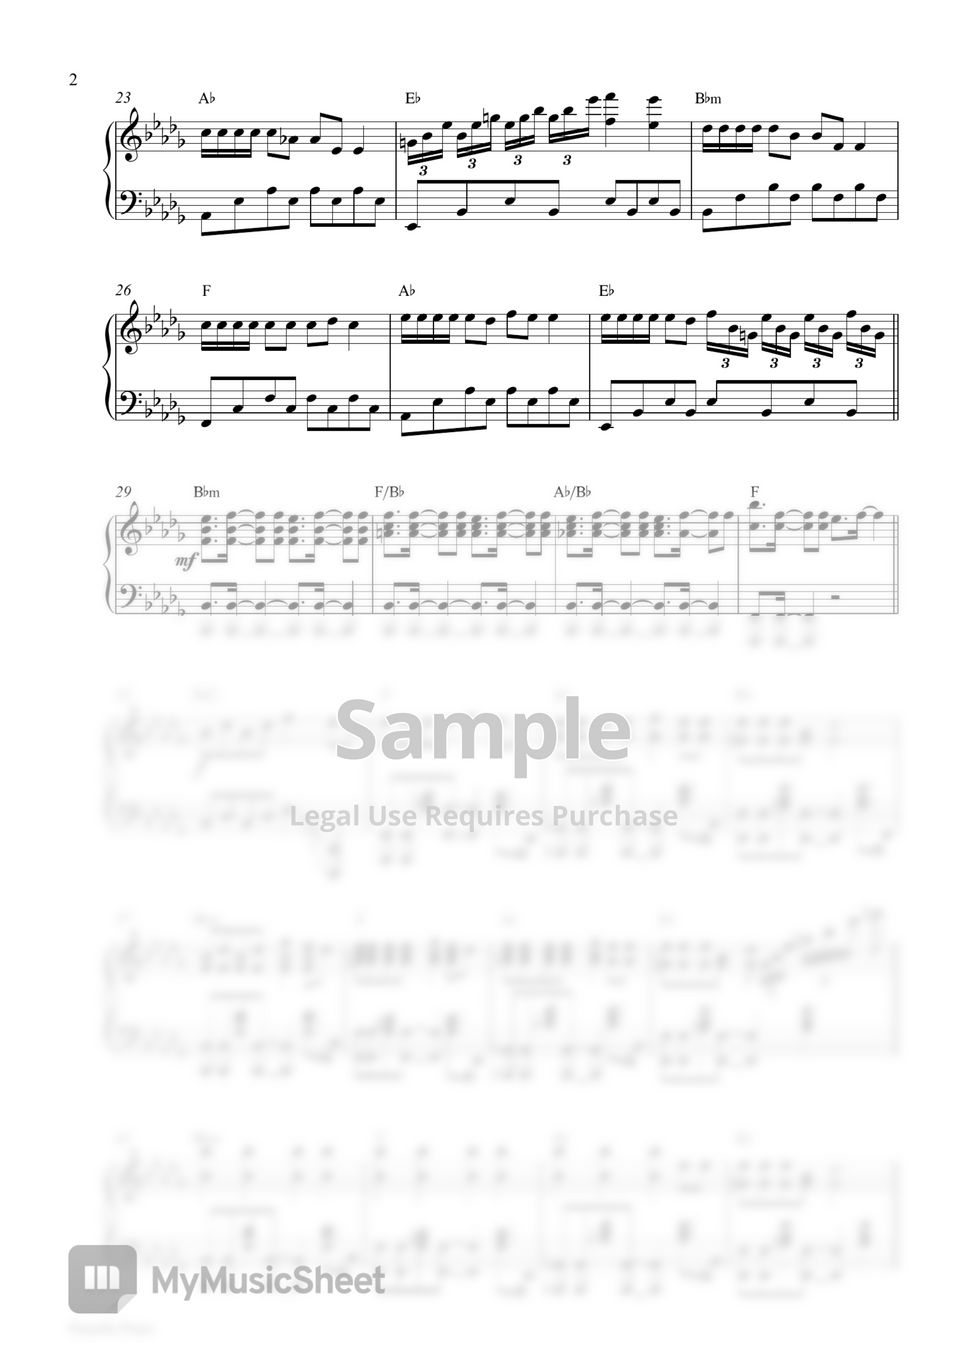 Imagine Dragons - Bones (Piano Sheet) by Pianella Piano